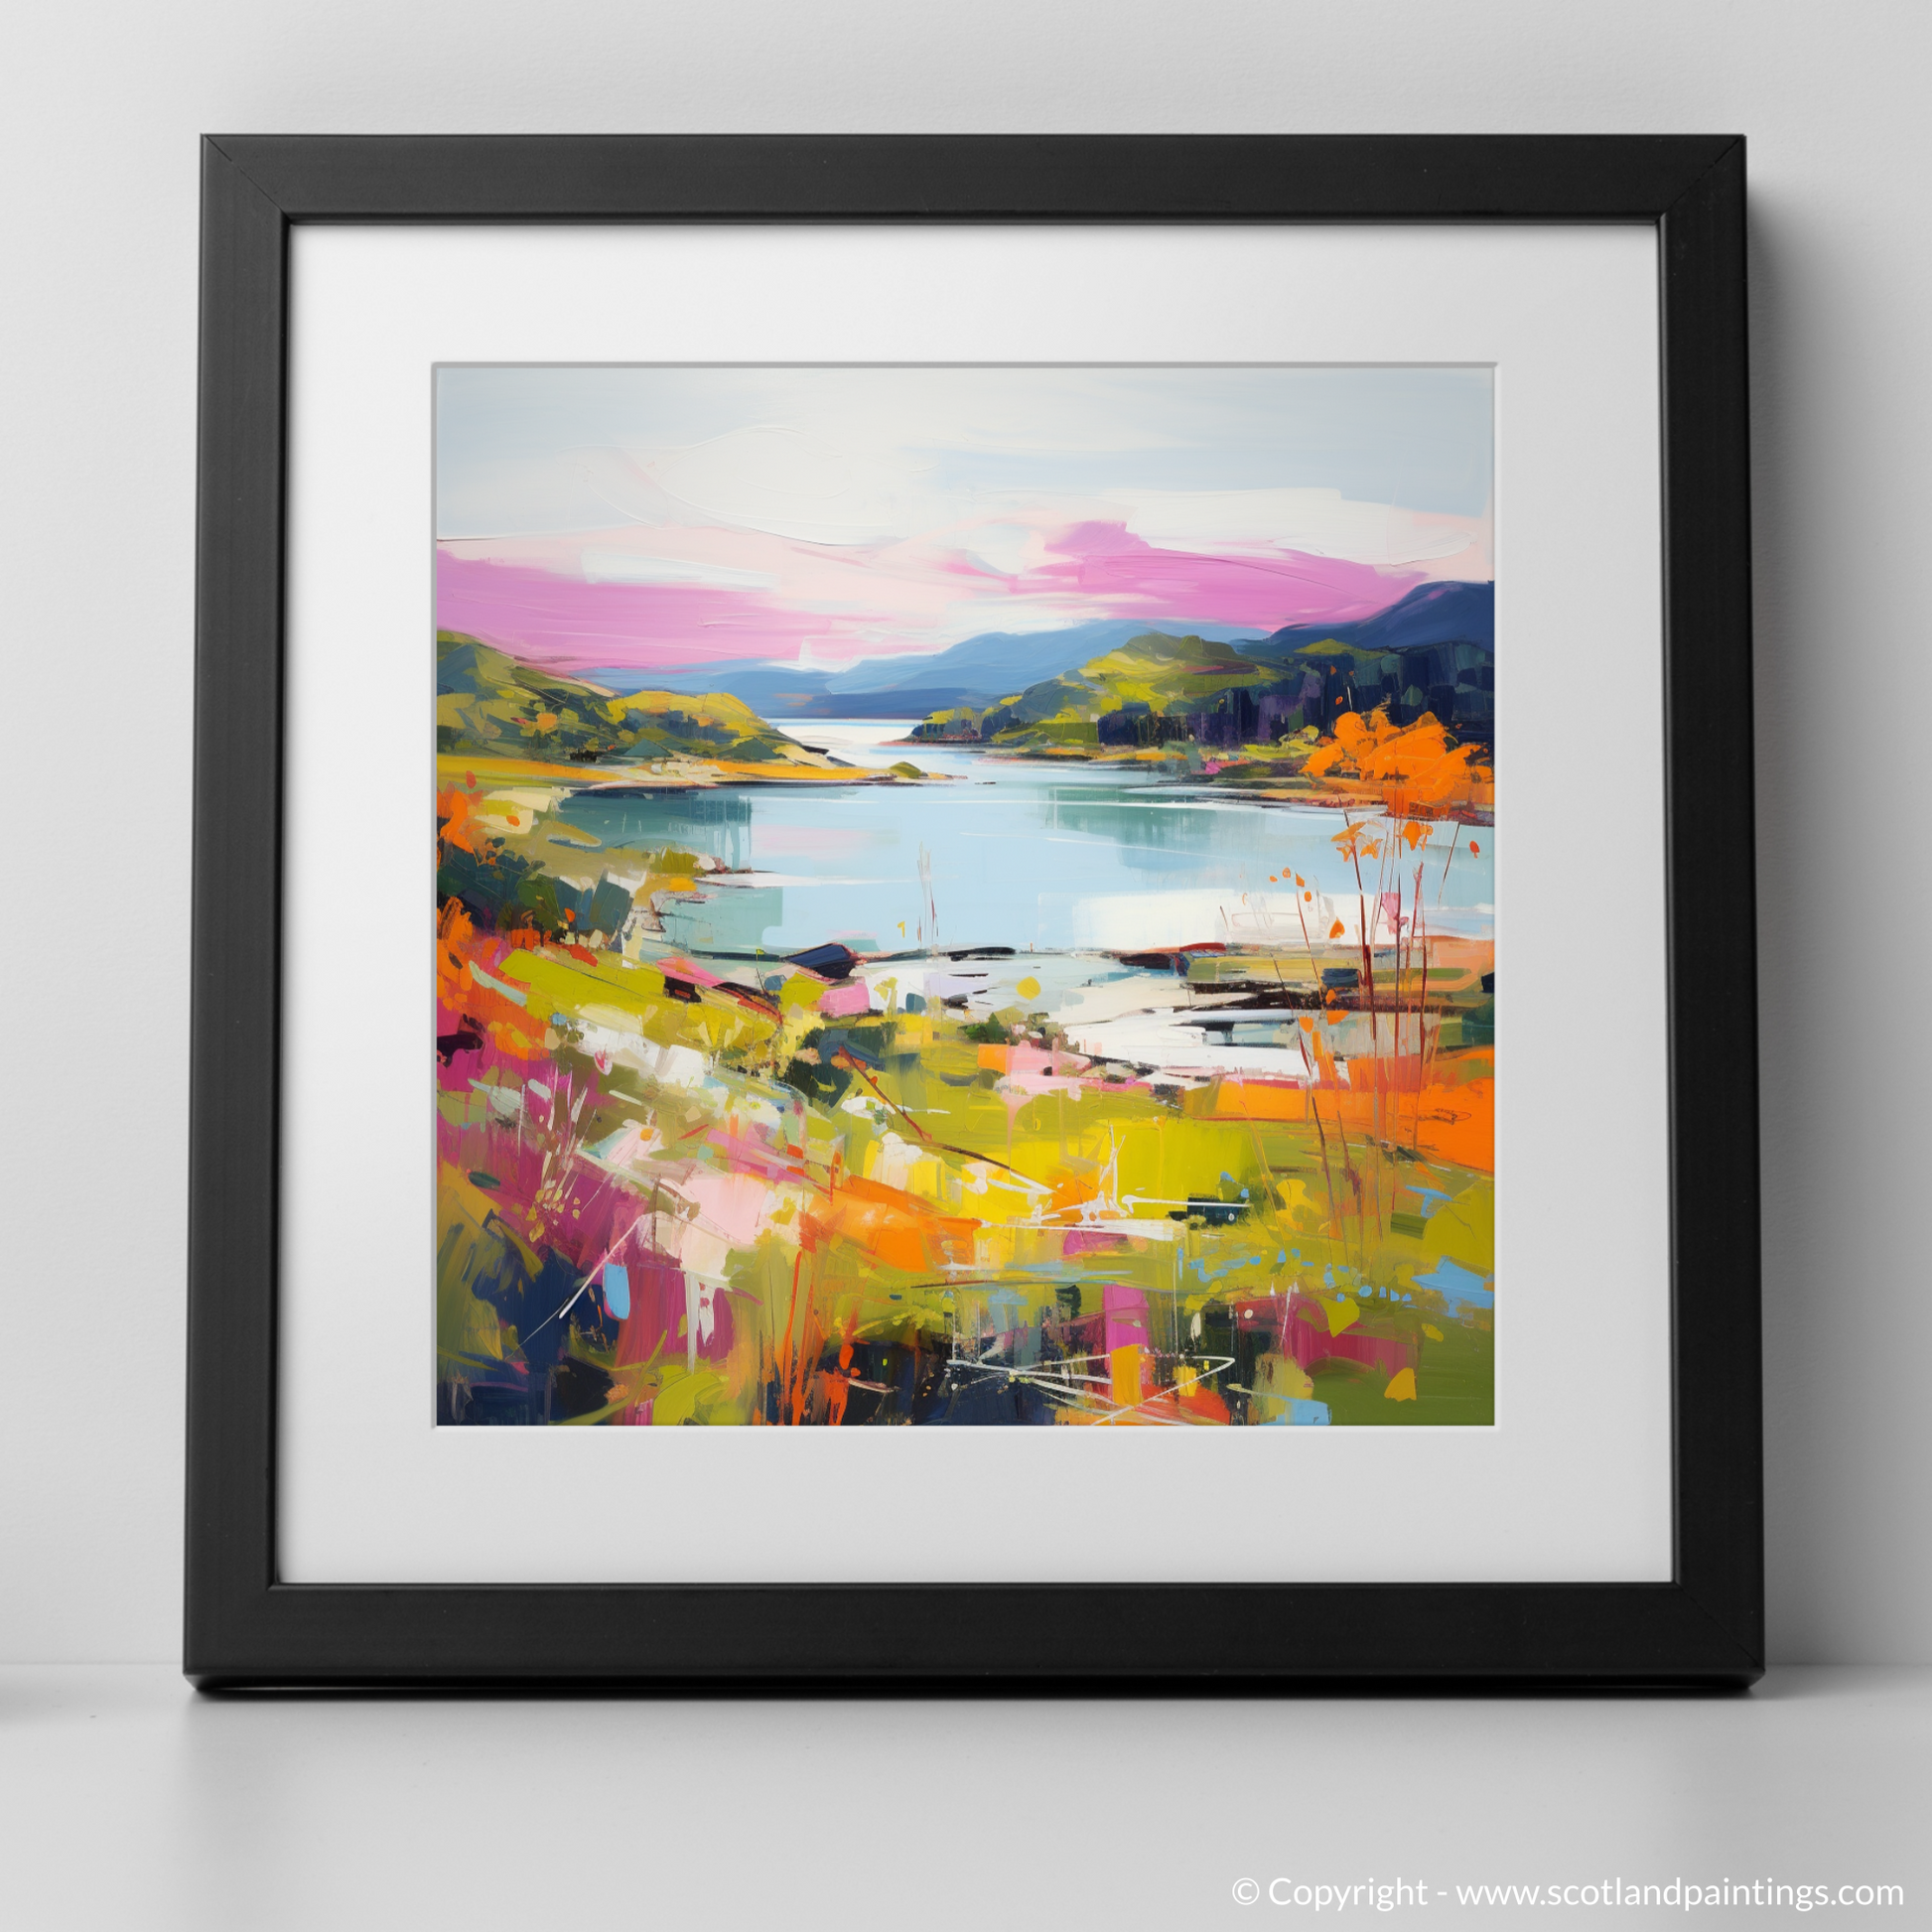 Art Print of Loch Morar, Highlands in summer with a black frame